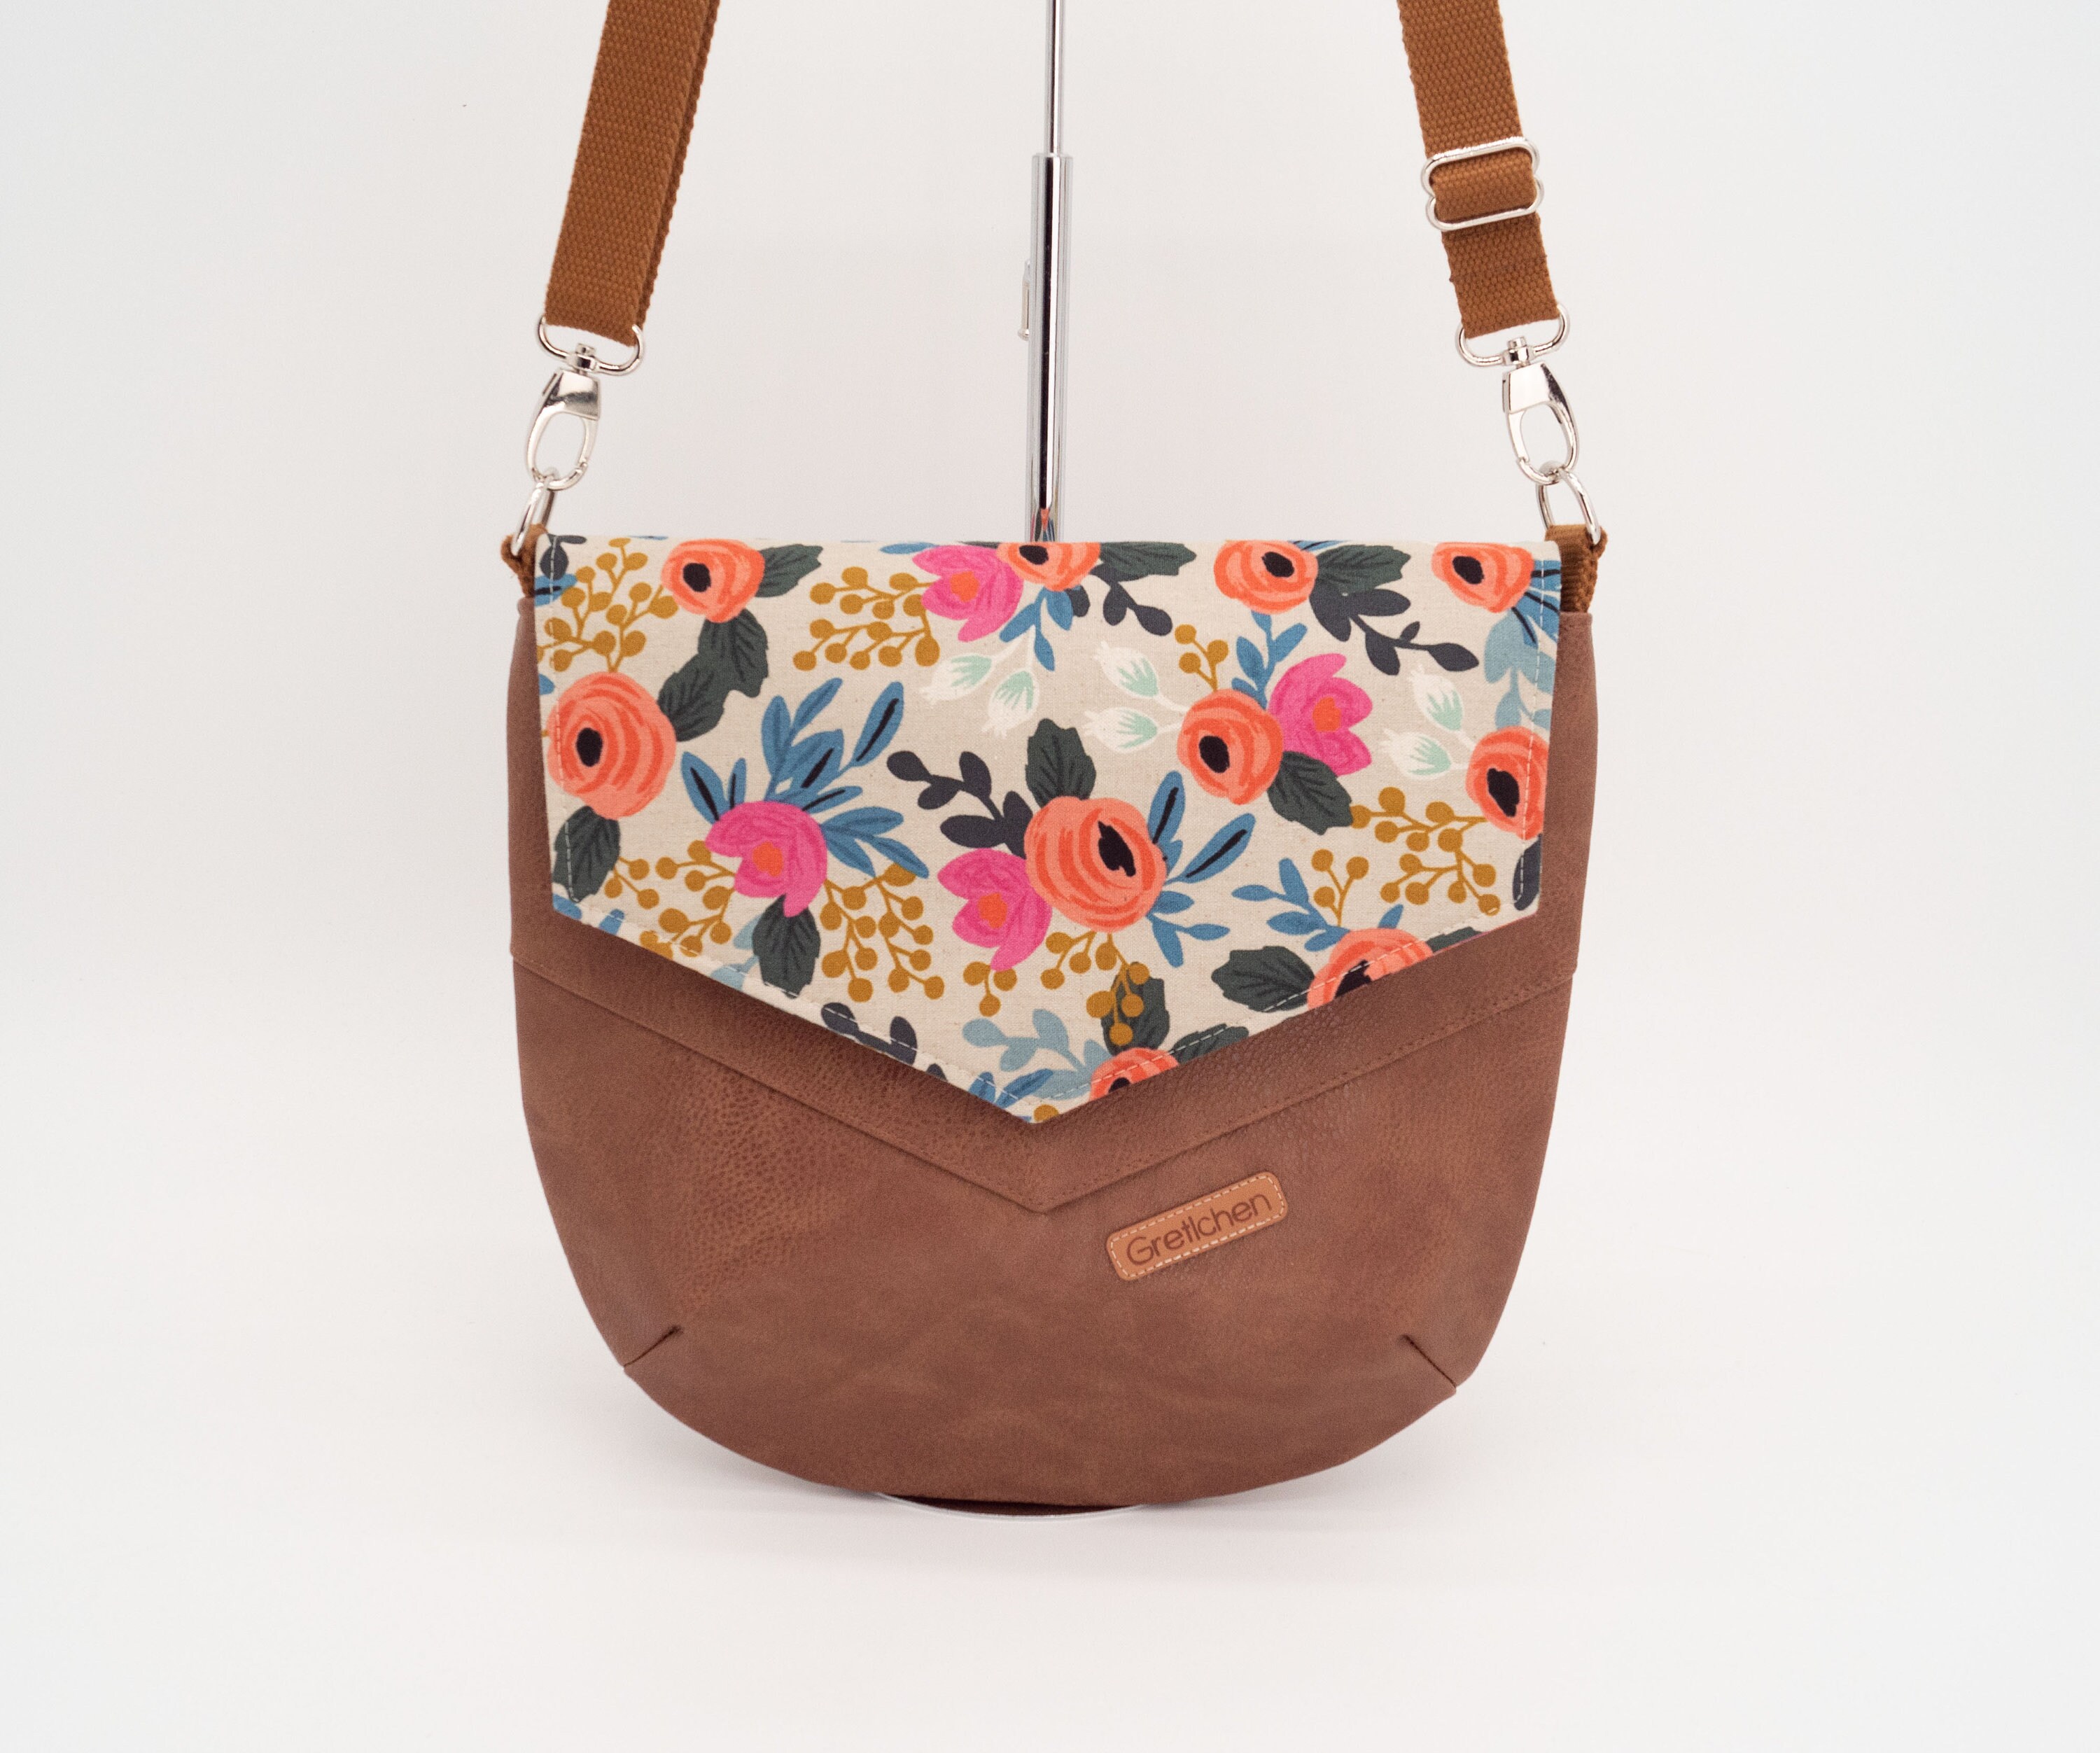 Gretchen Bag in Blush – Dauphinette